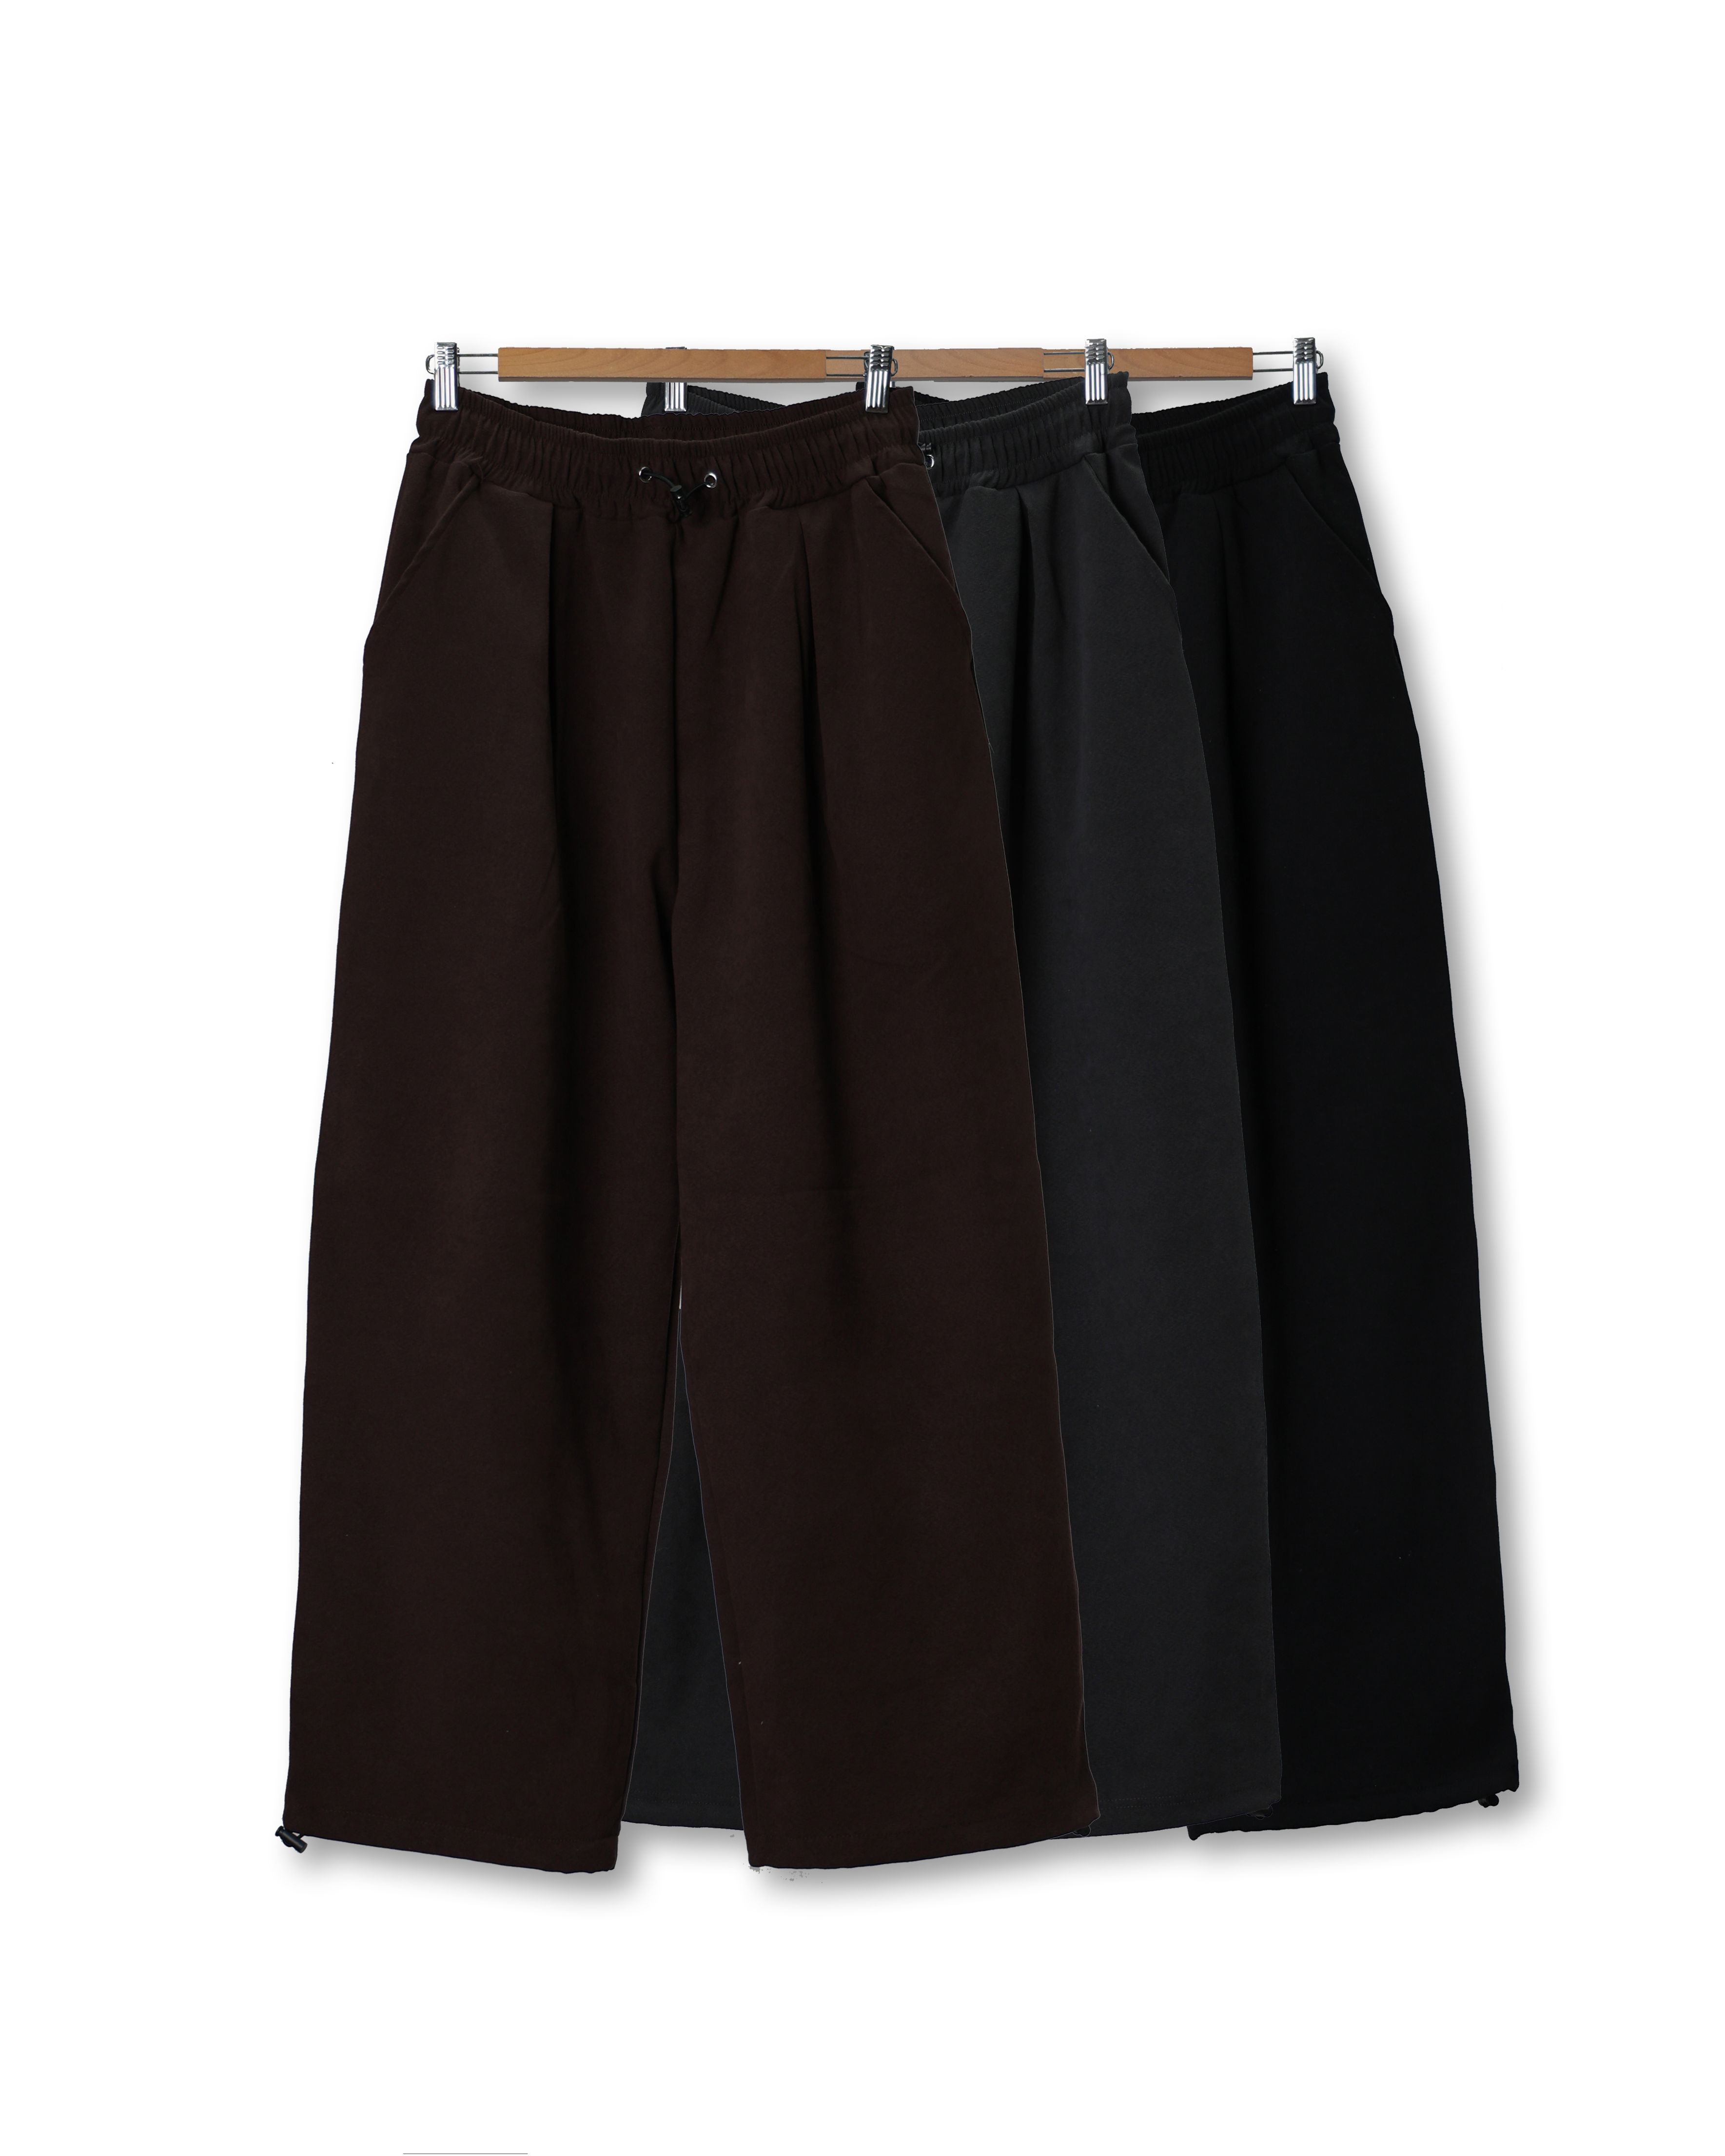 DENS Cozy Pintuck String Easy Pants (Black/Charcoal/Brown)